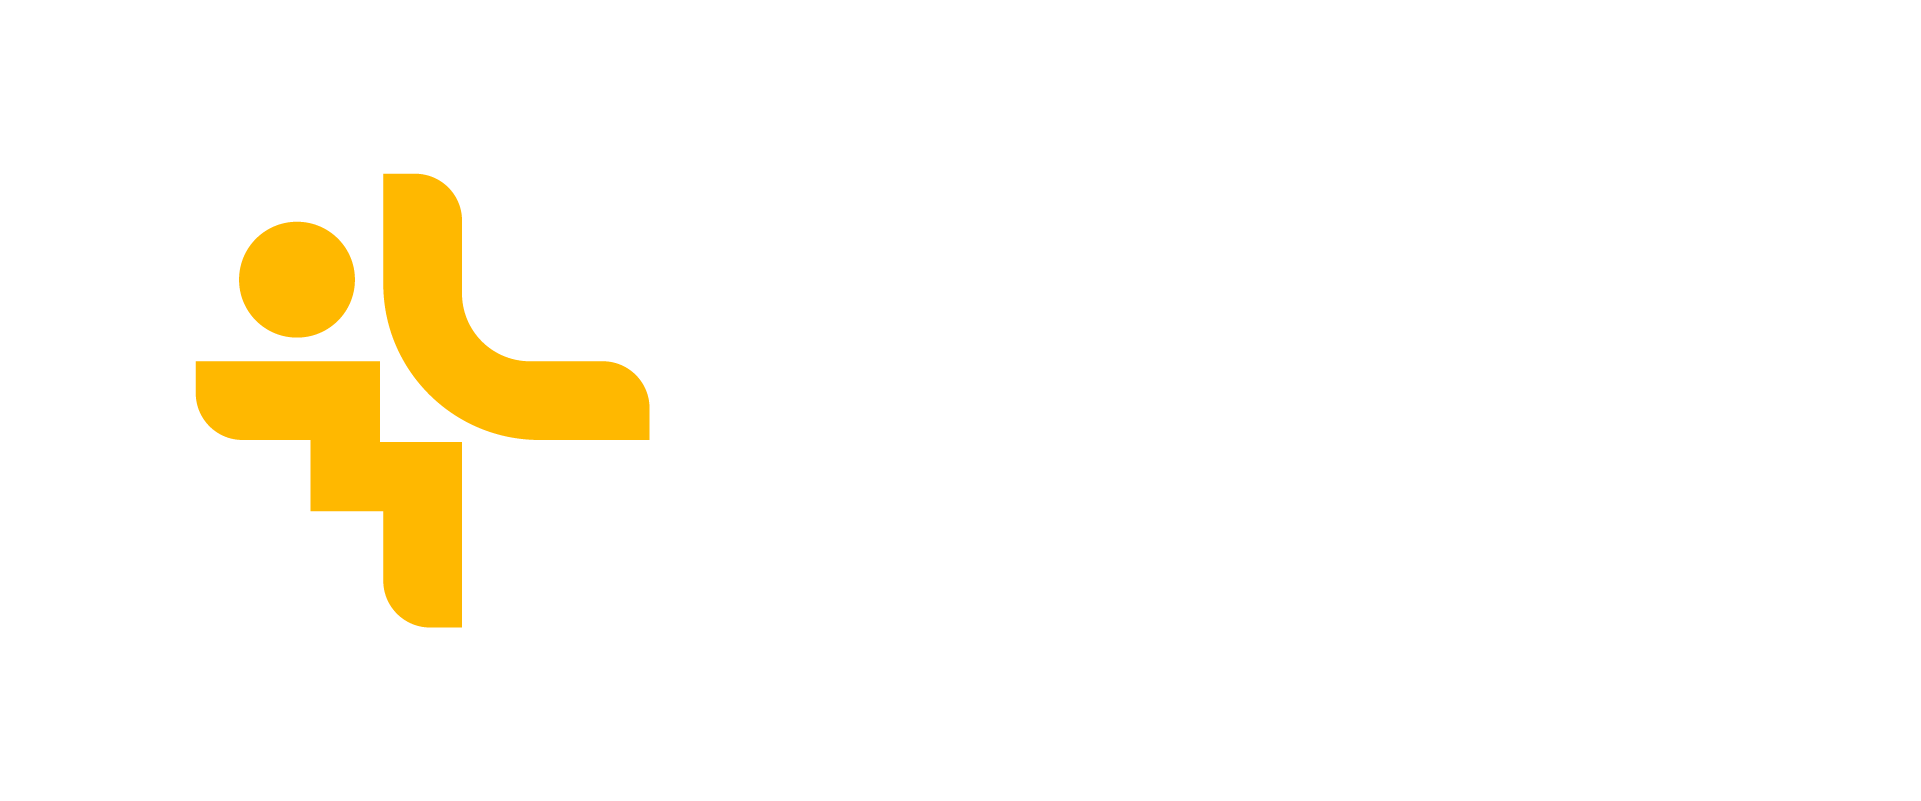 Linus Medical